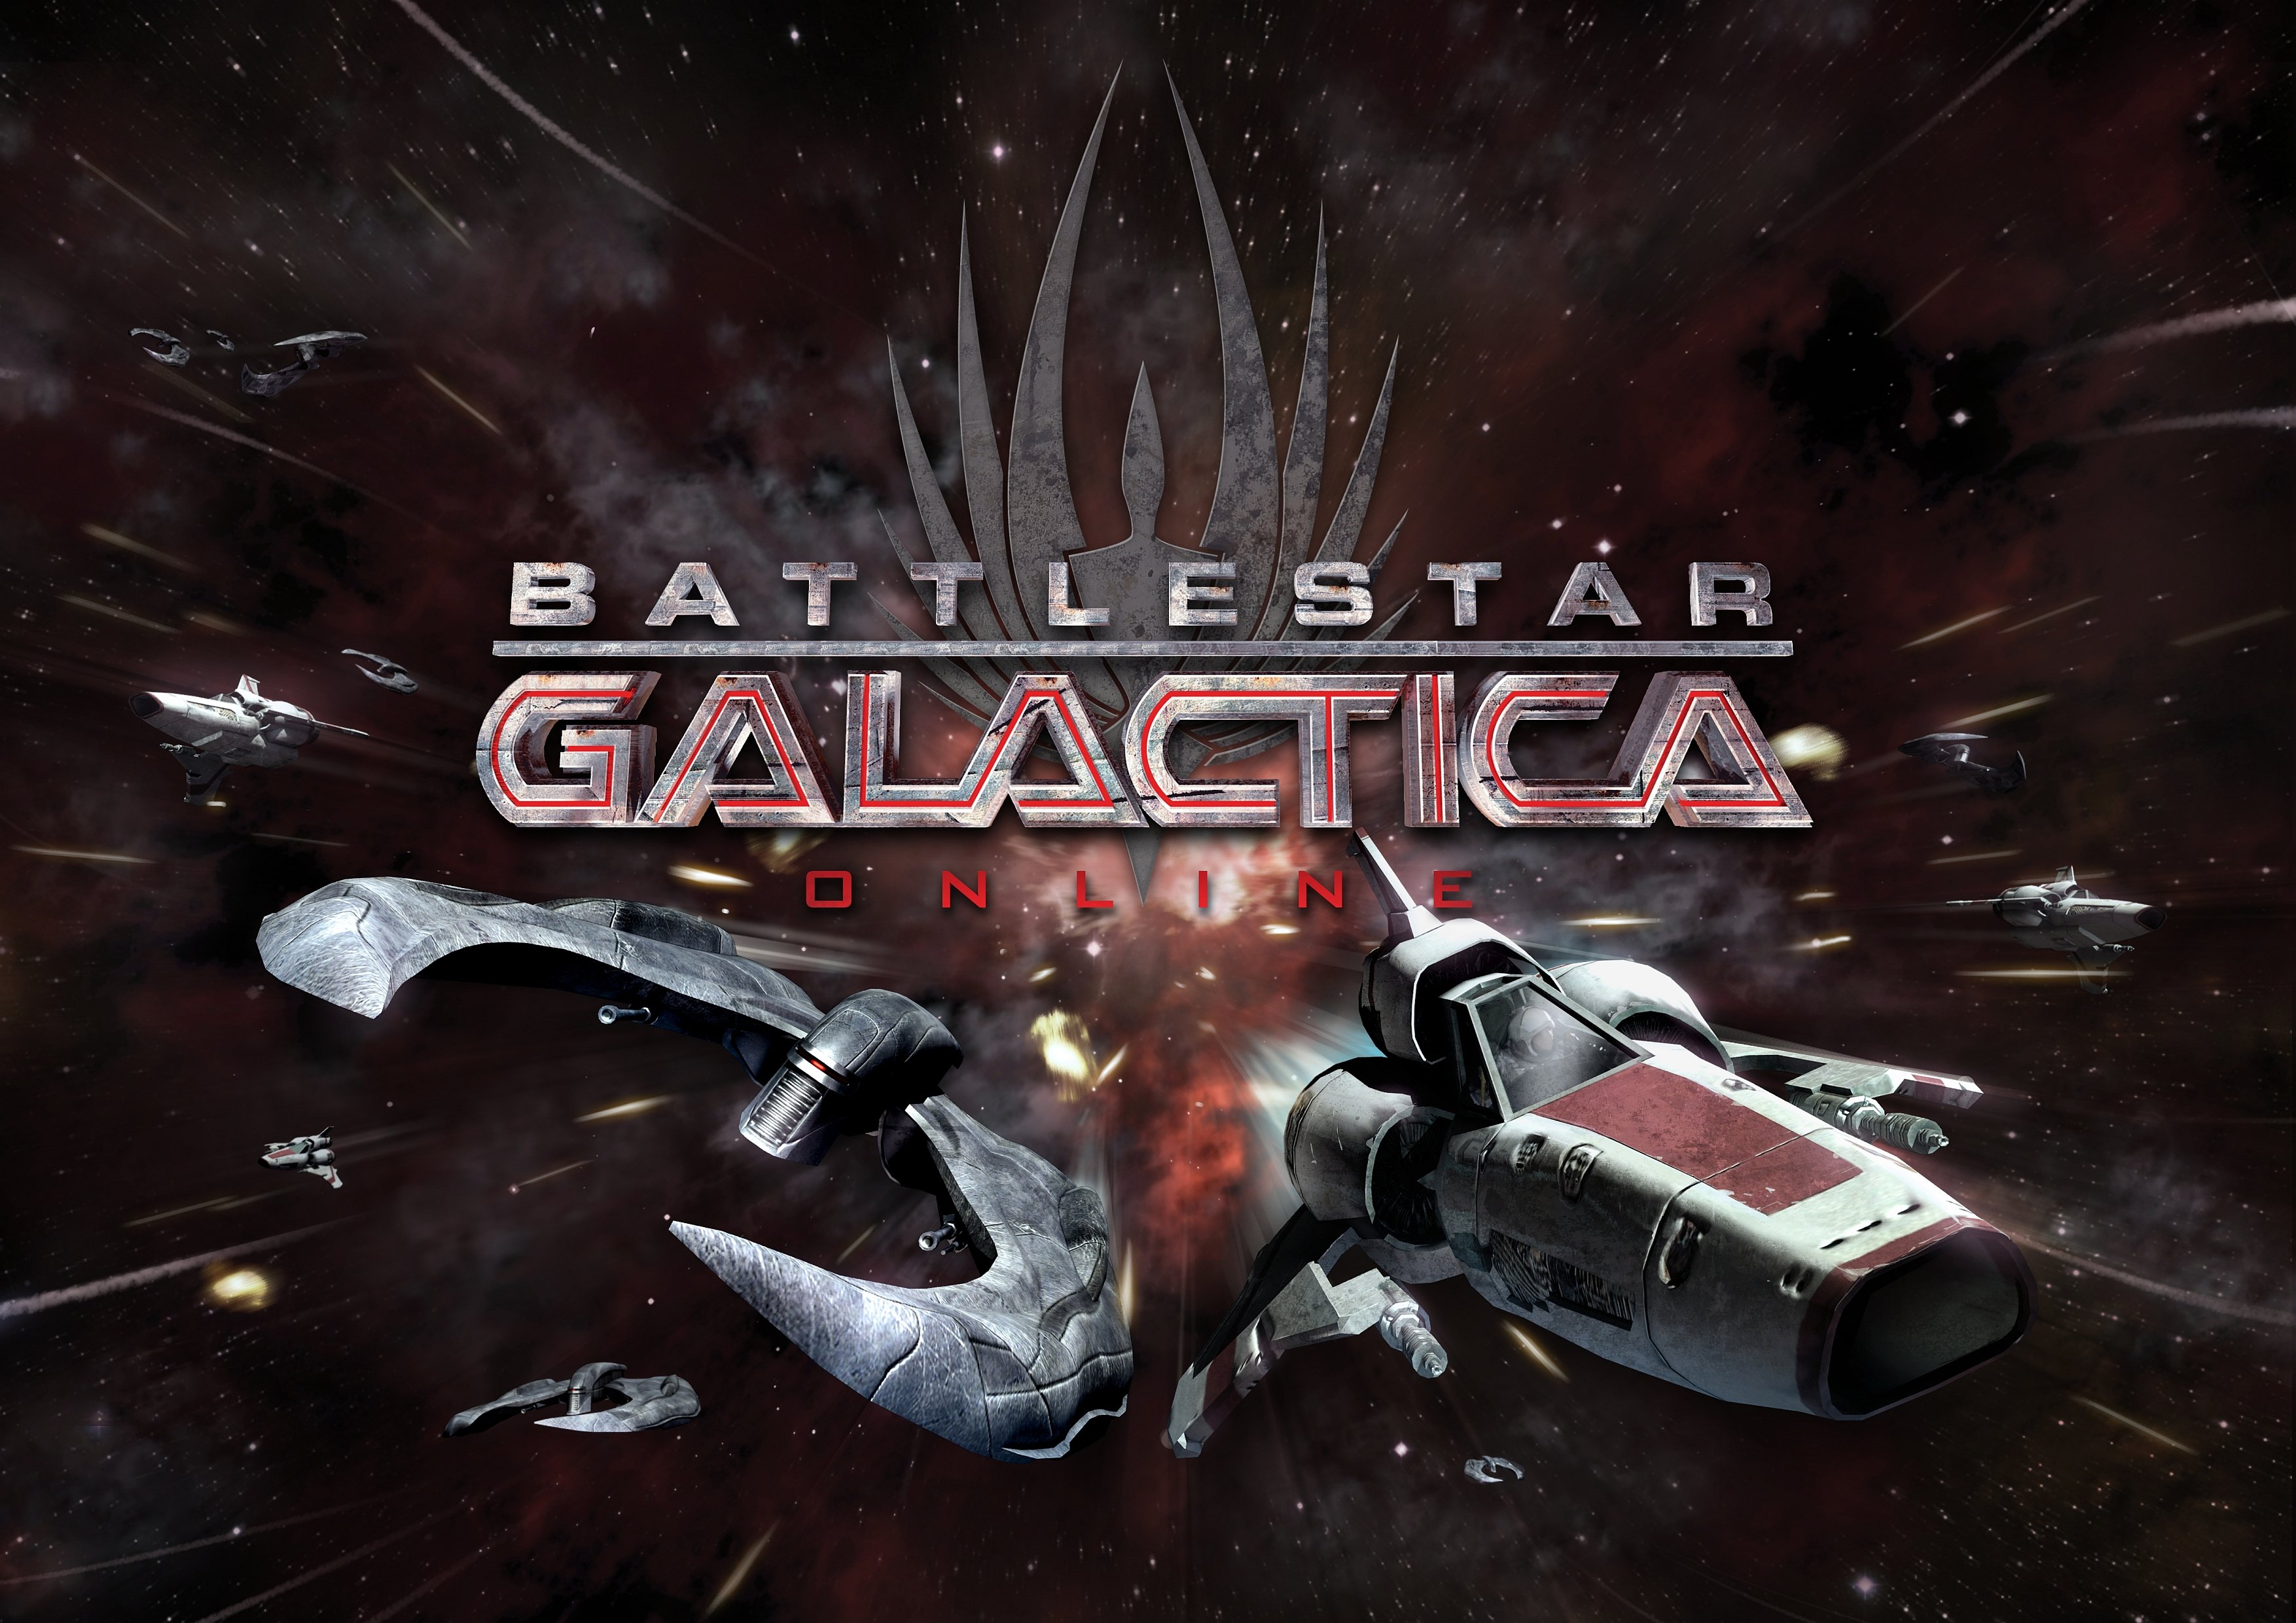 Battlestar Galactica Online Pics, Video Game Collection